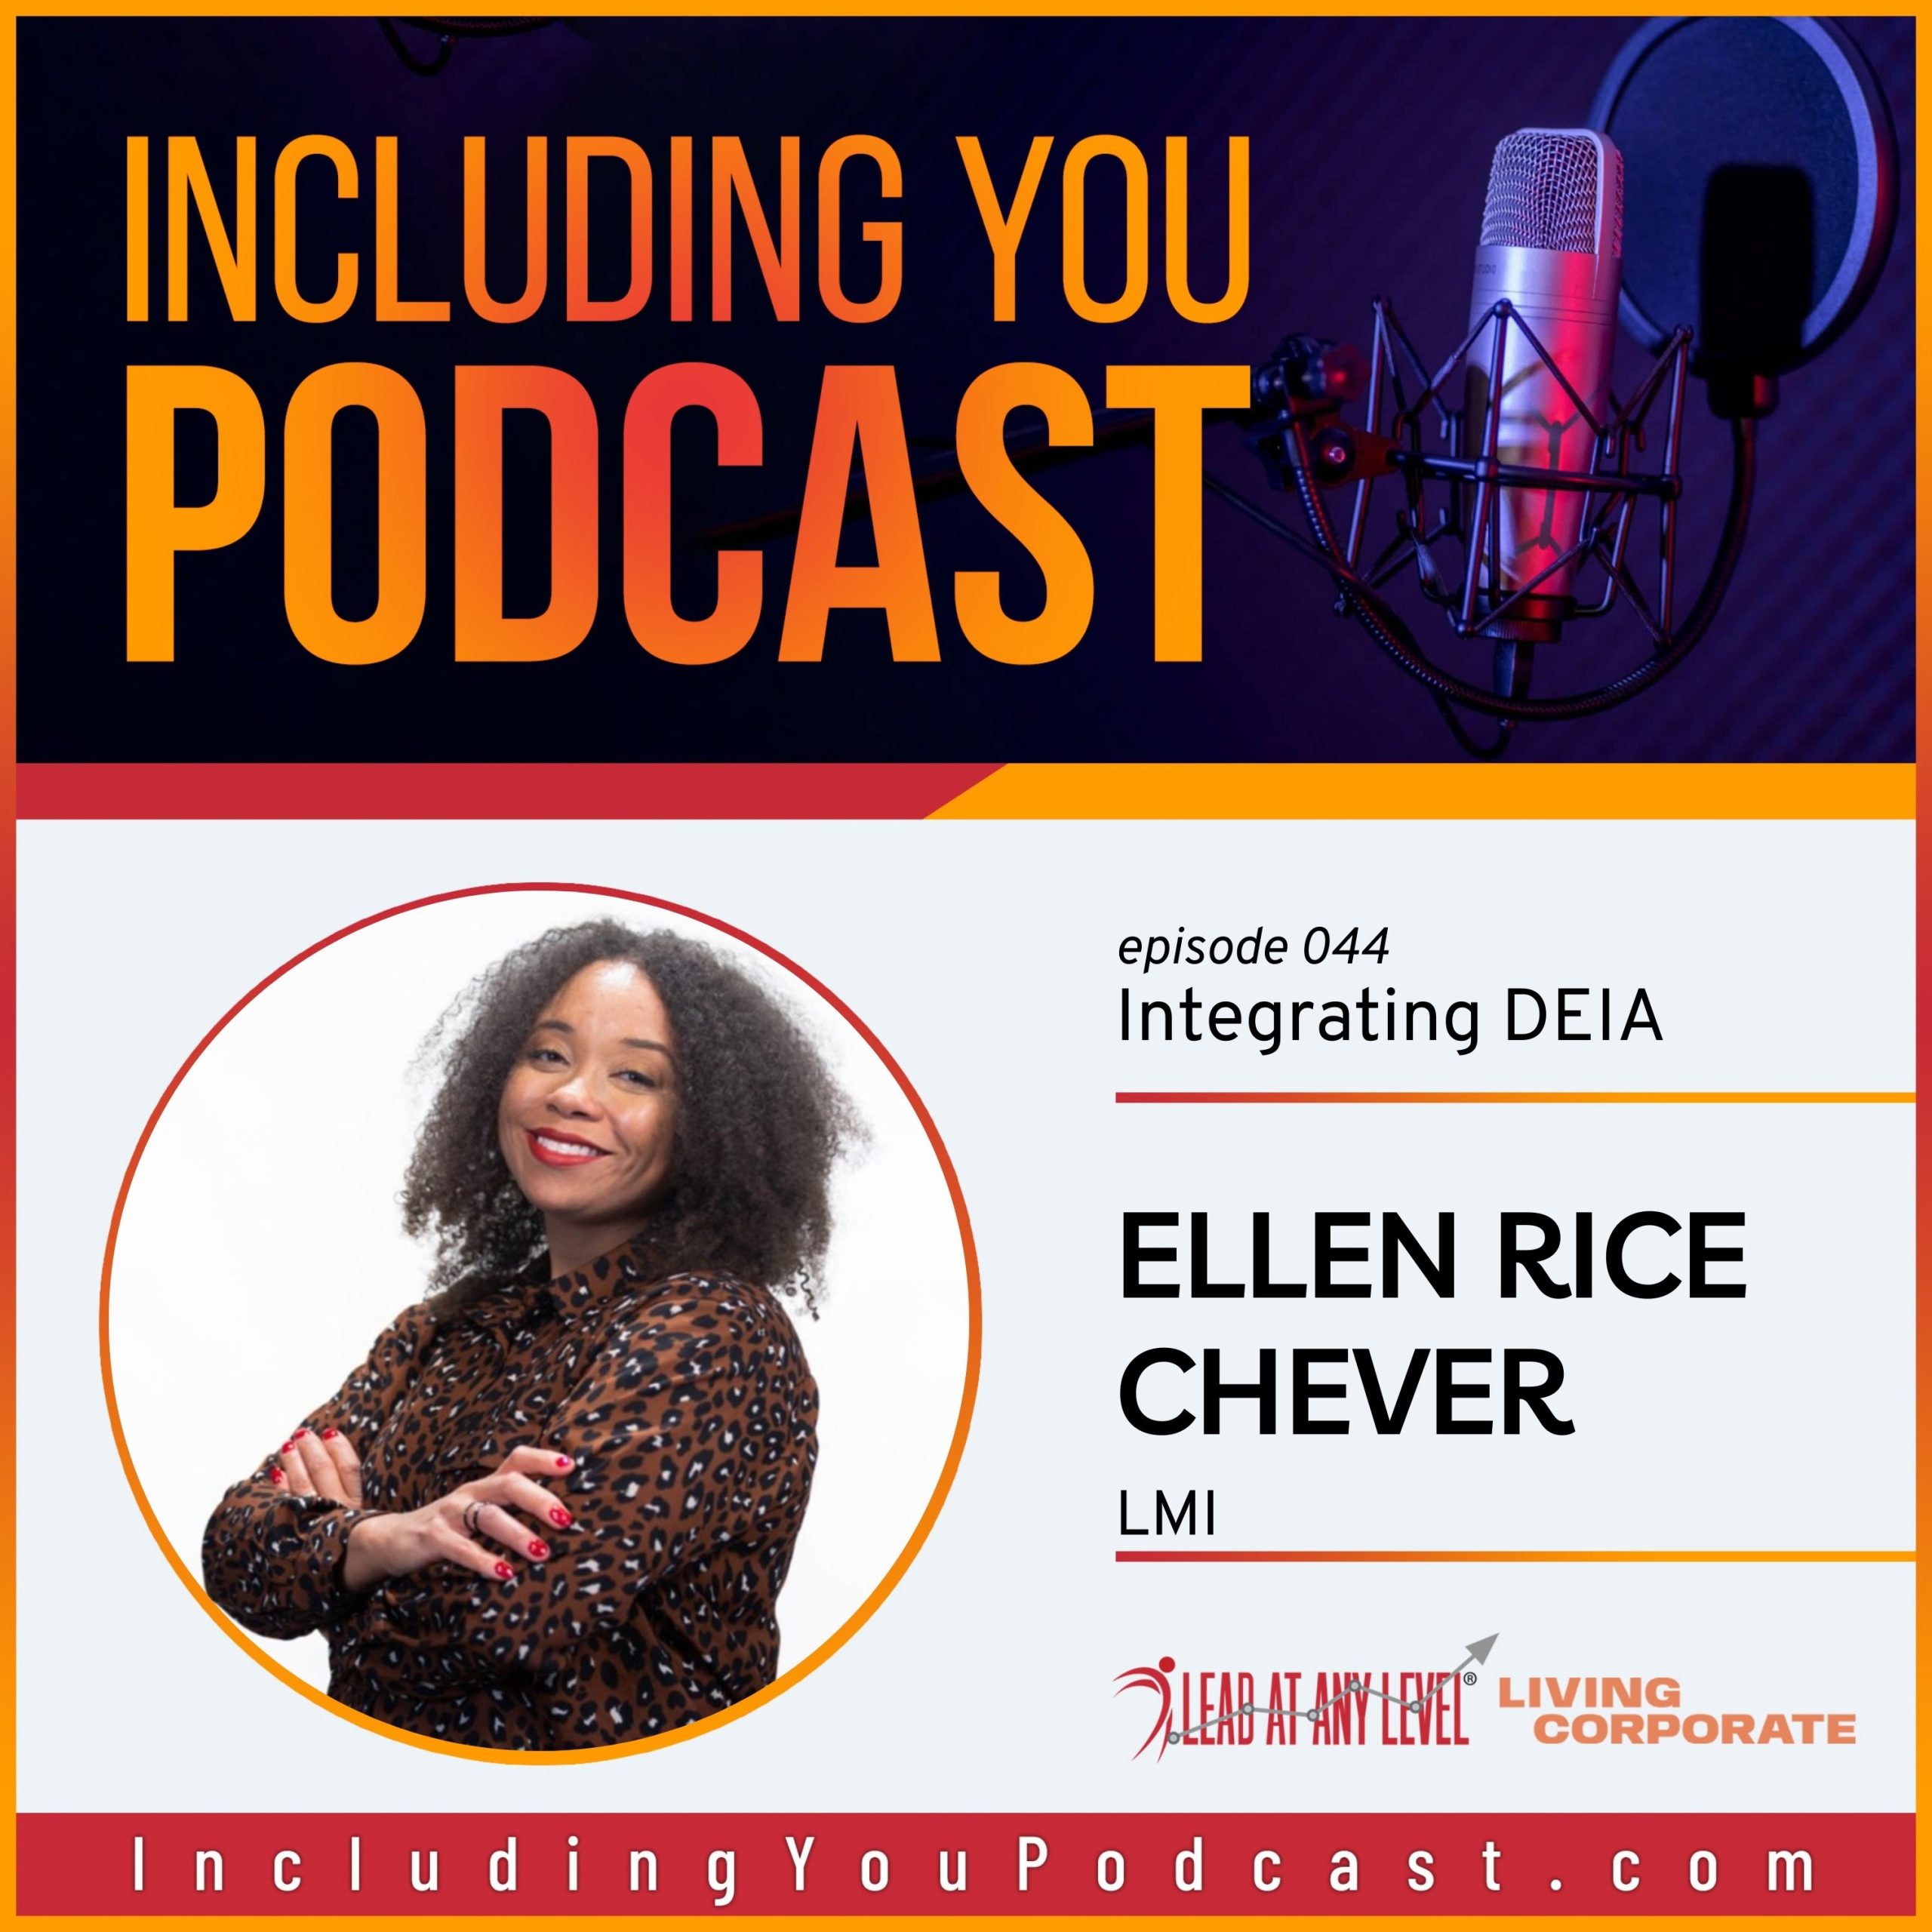 e044. Integrating DEIA with Ellen Rice Chever